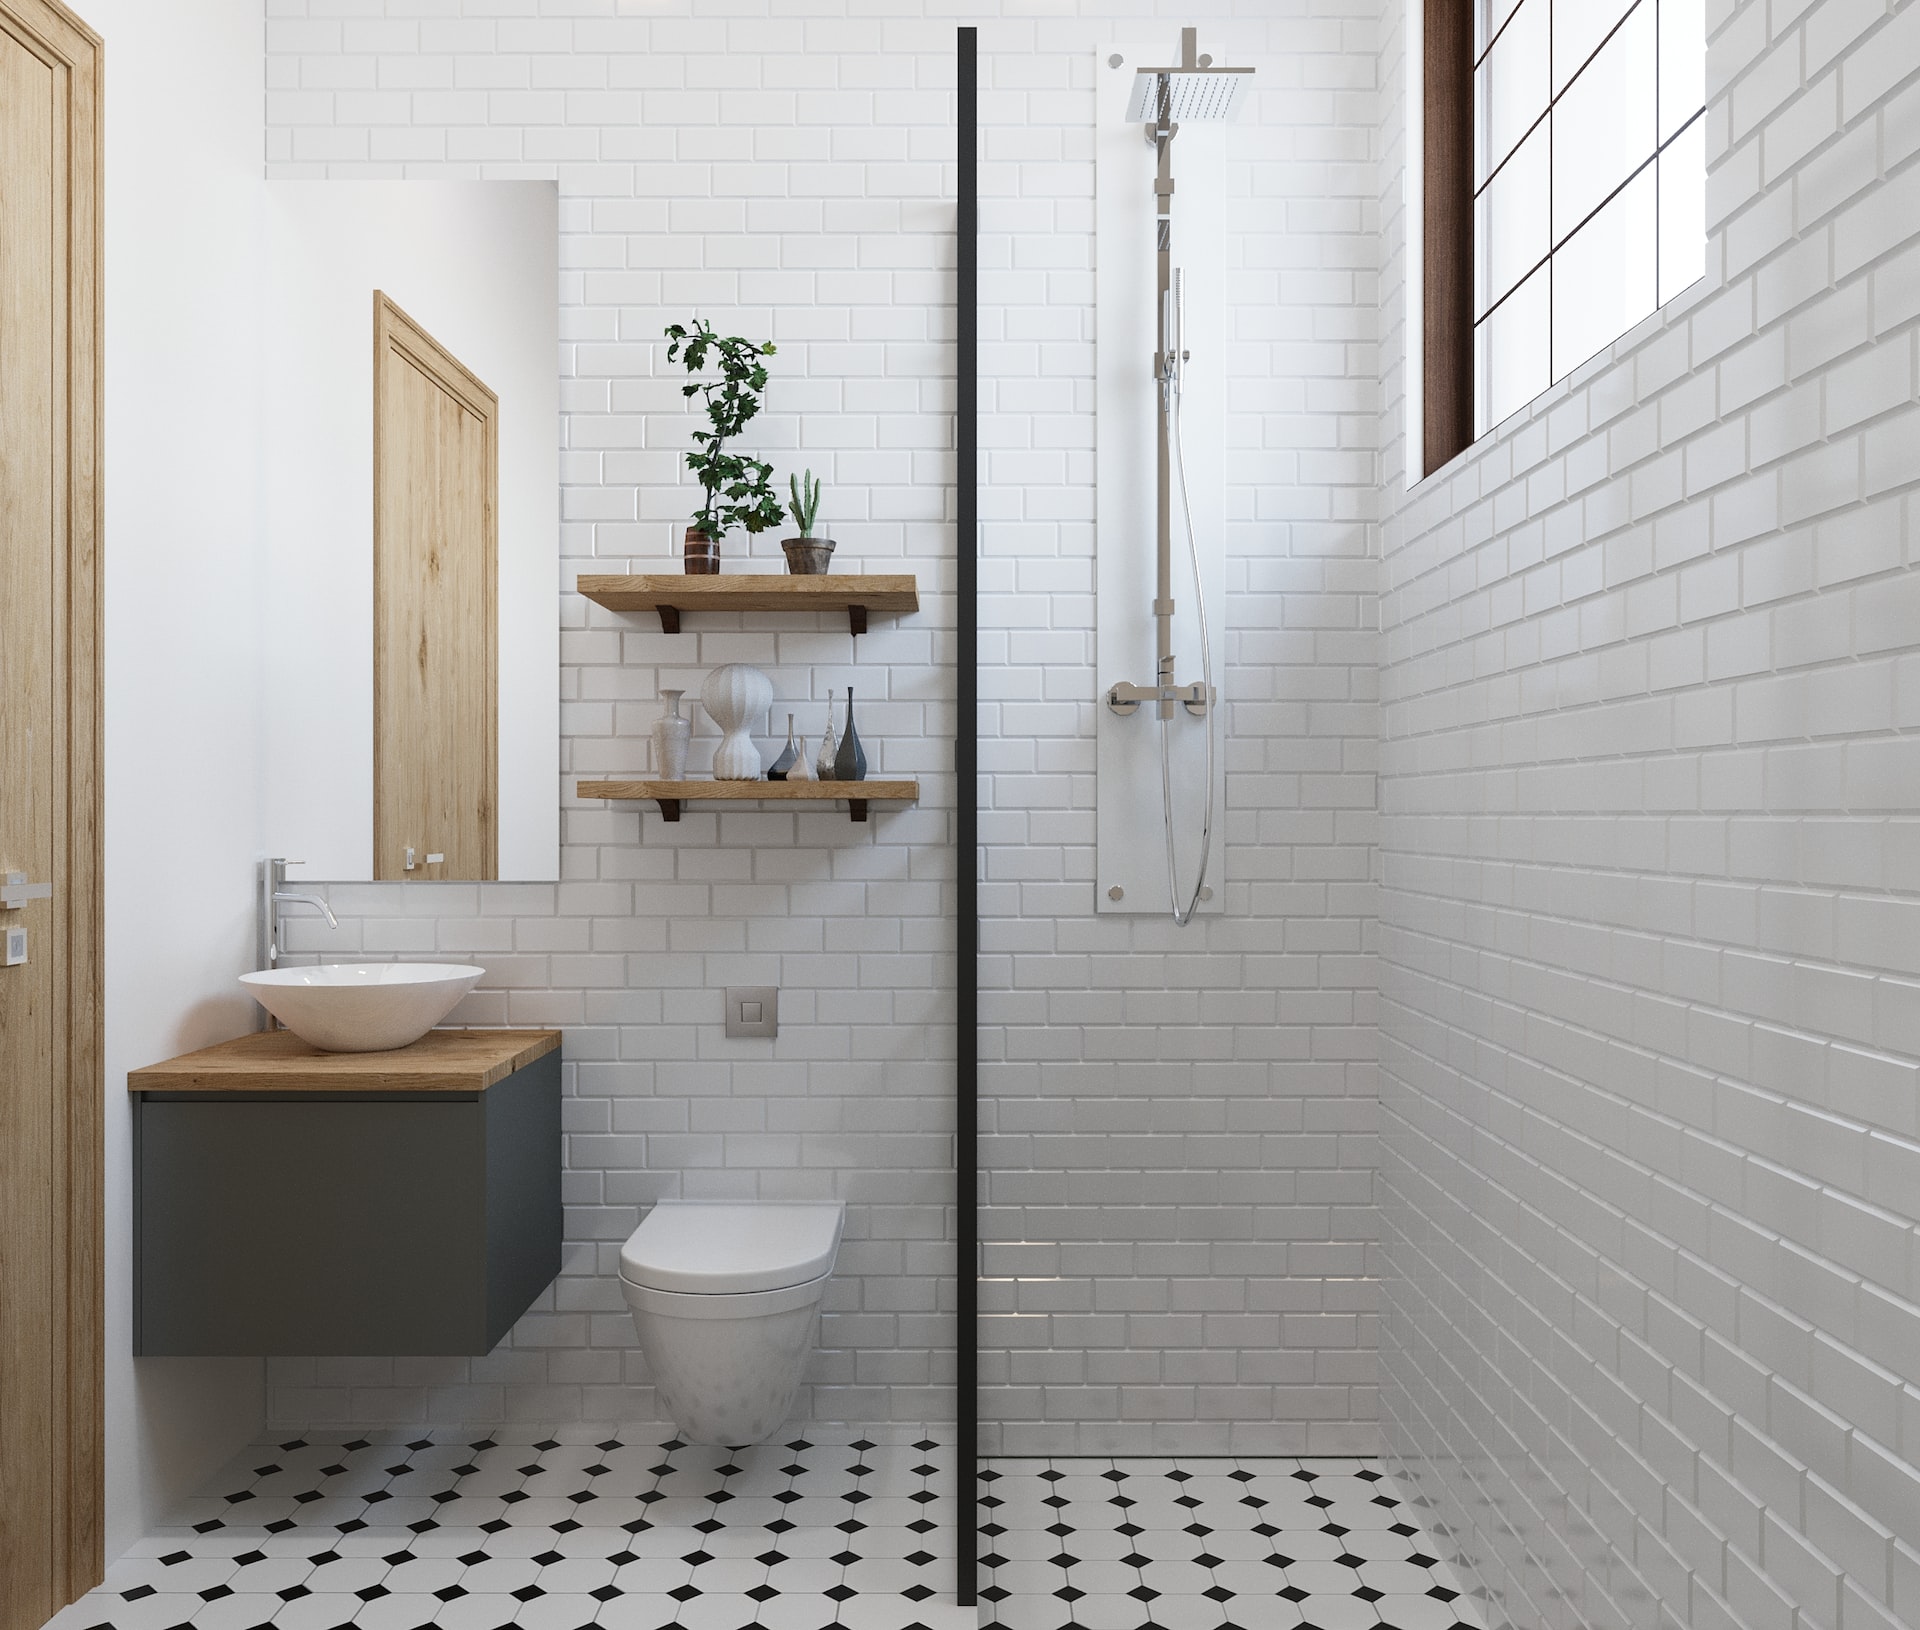 What Defines A Good Bathroom Design?